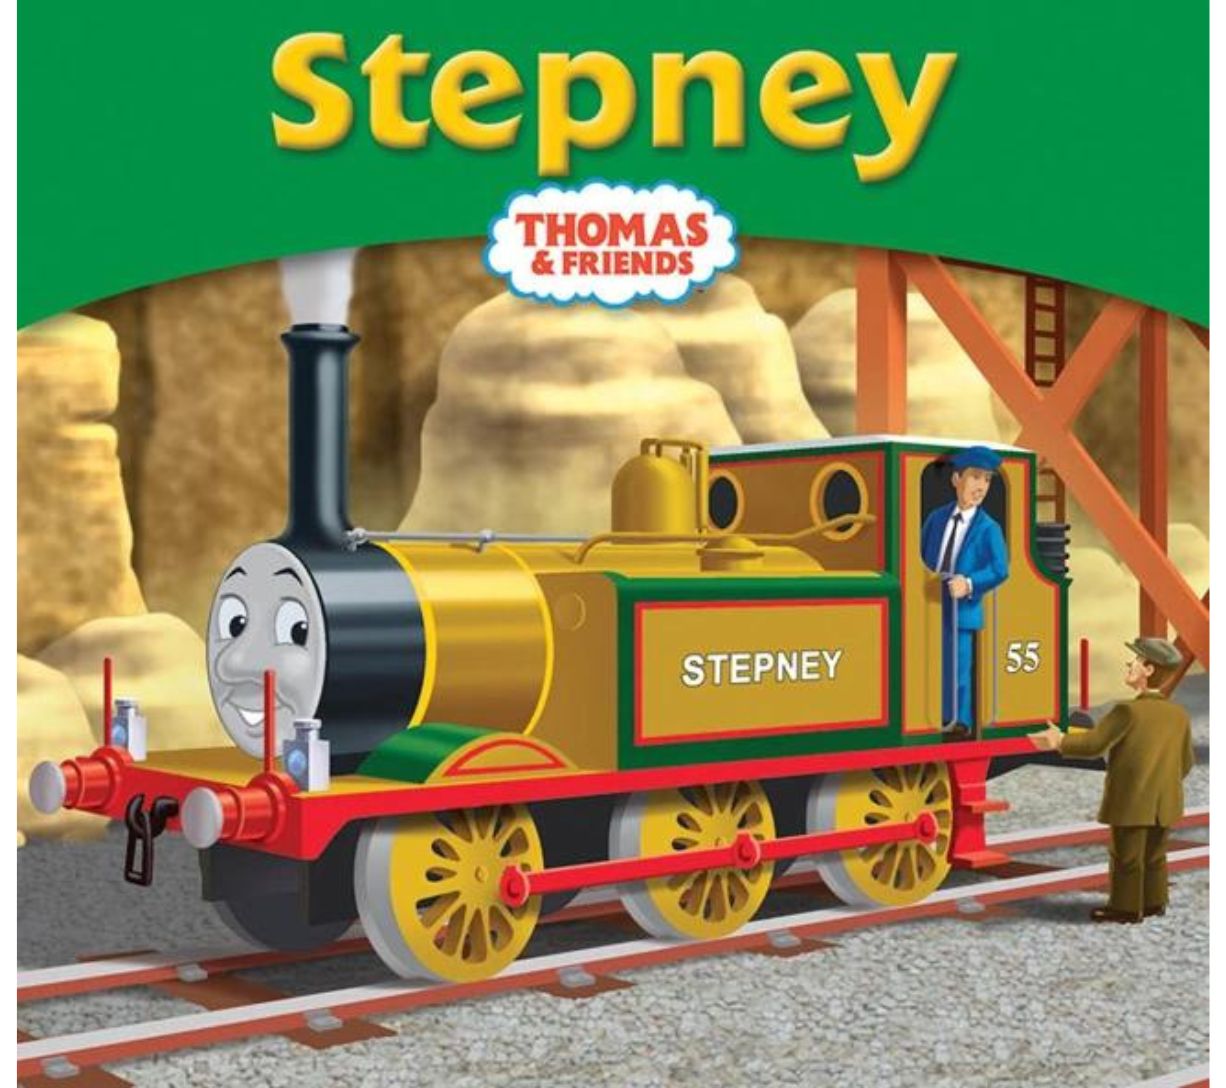 Thomas and Friends - Stepney